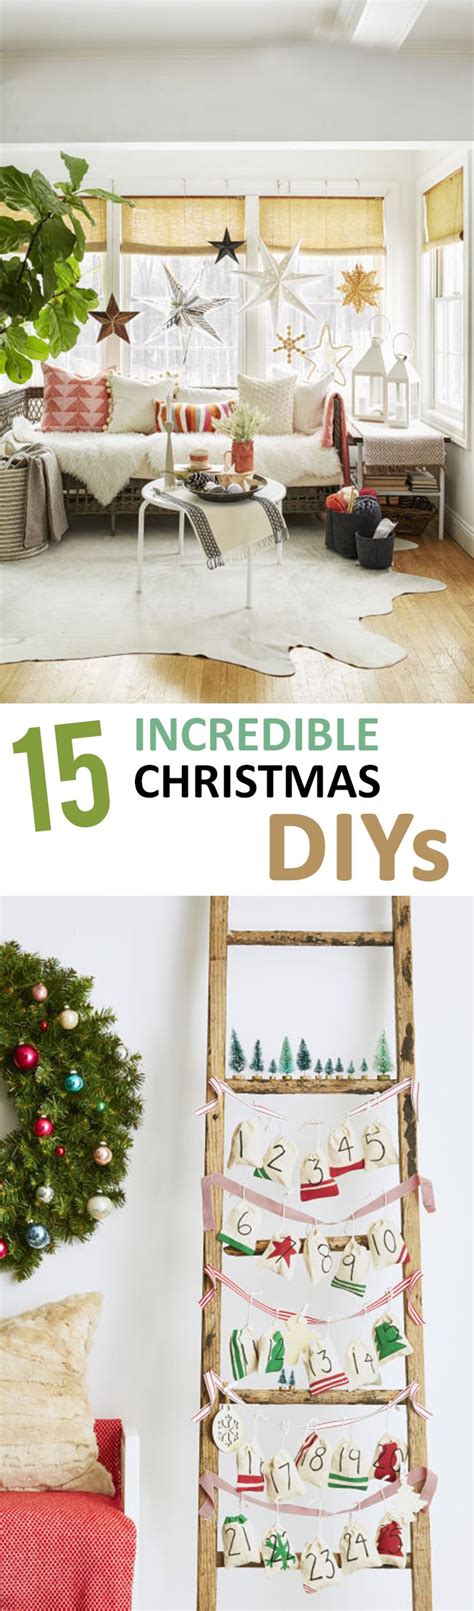 15 Incredible Christmas Diys Sunlit Spaces Christmas Projects Diy